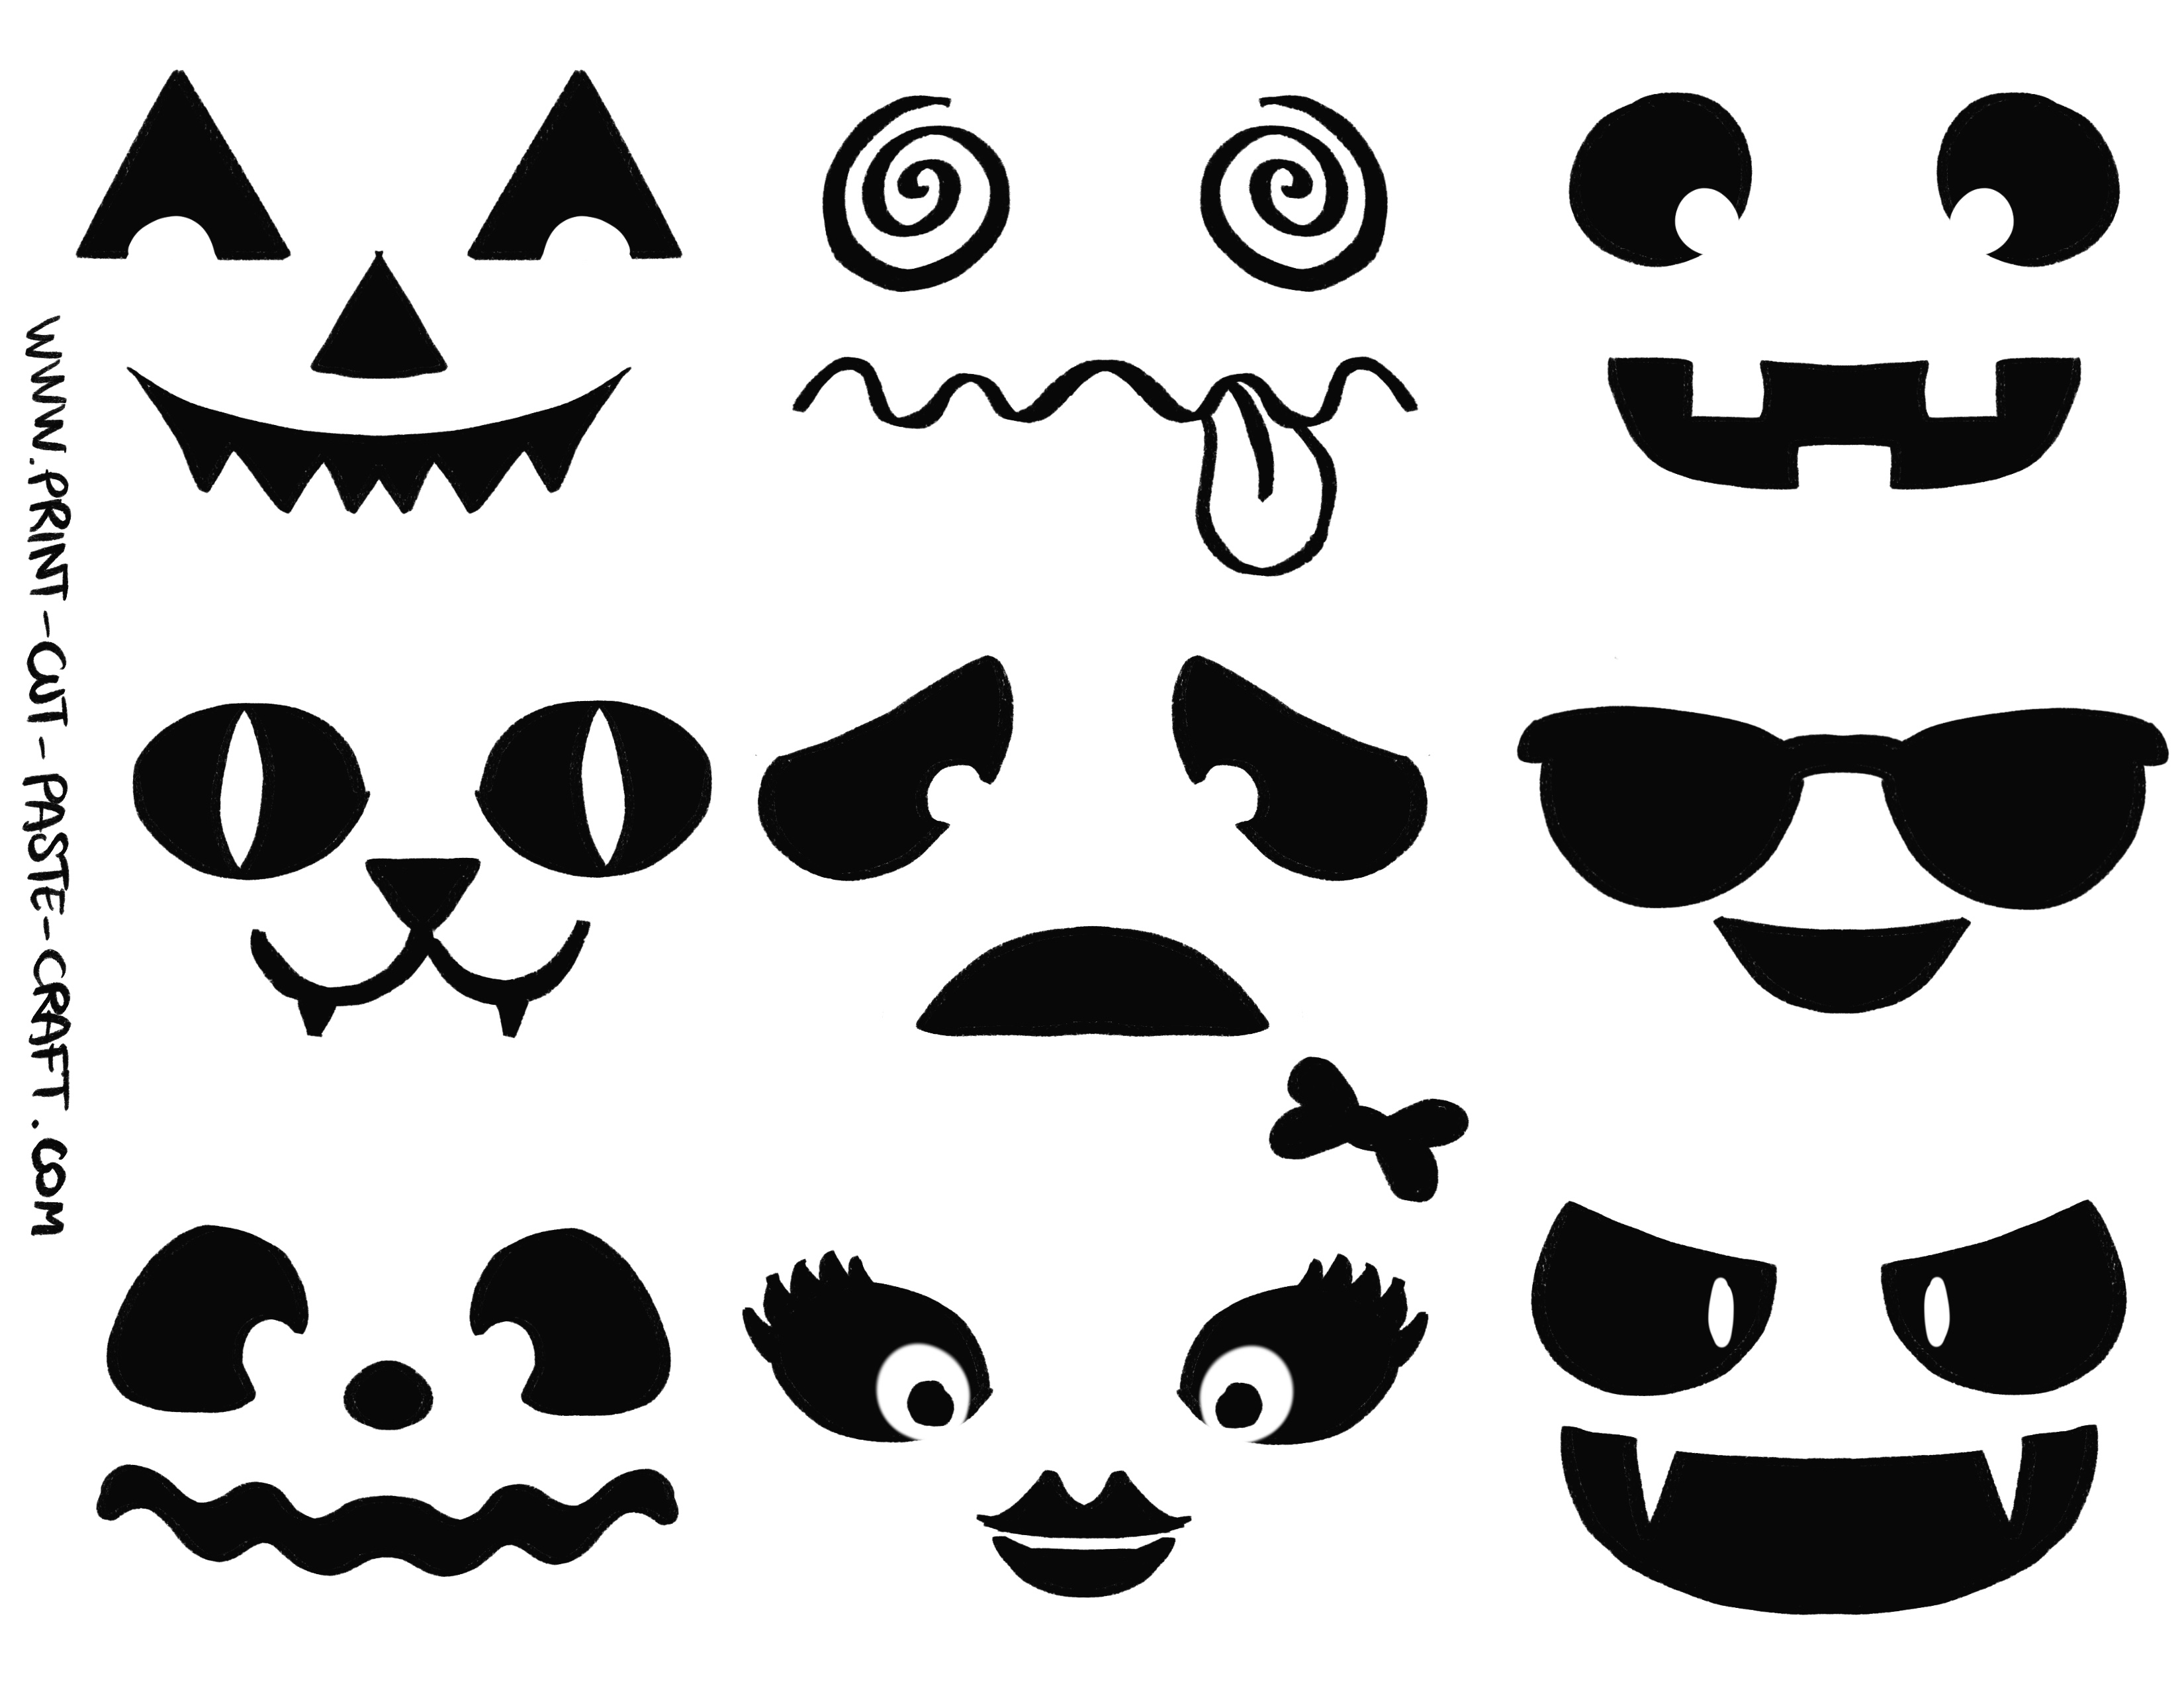 Free Printable Halloween Craft by Print-cut-paste-craft.com: Pumpkin faces